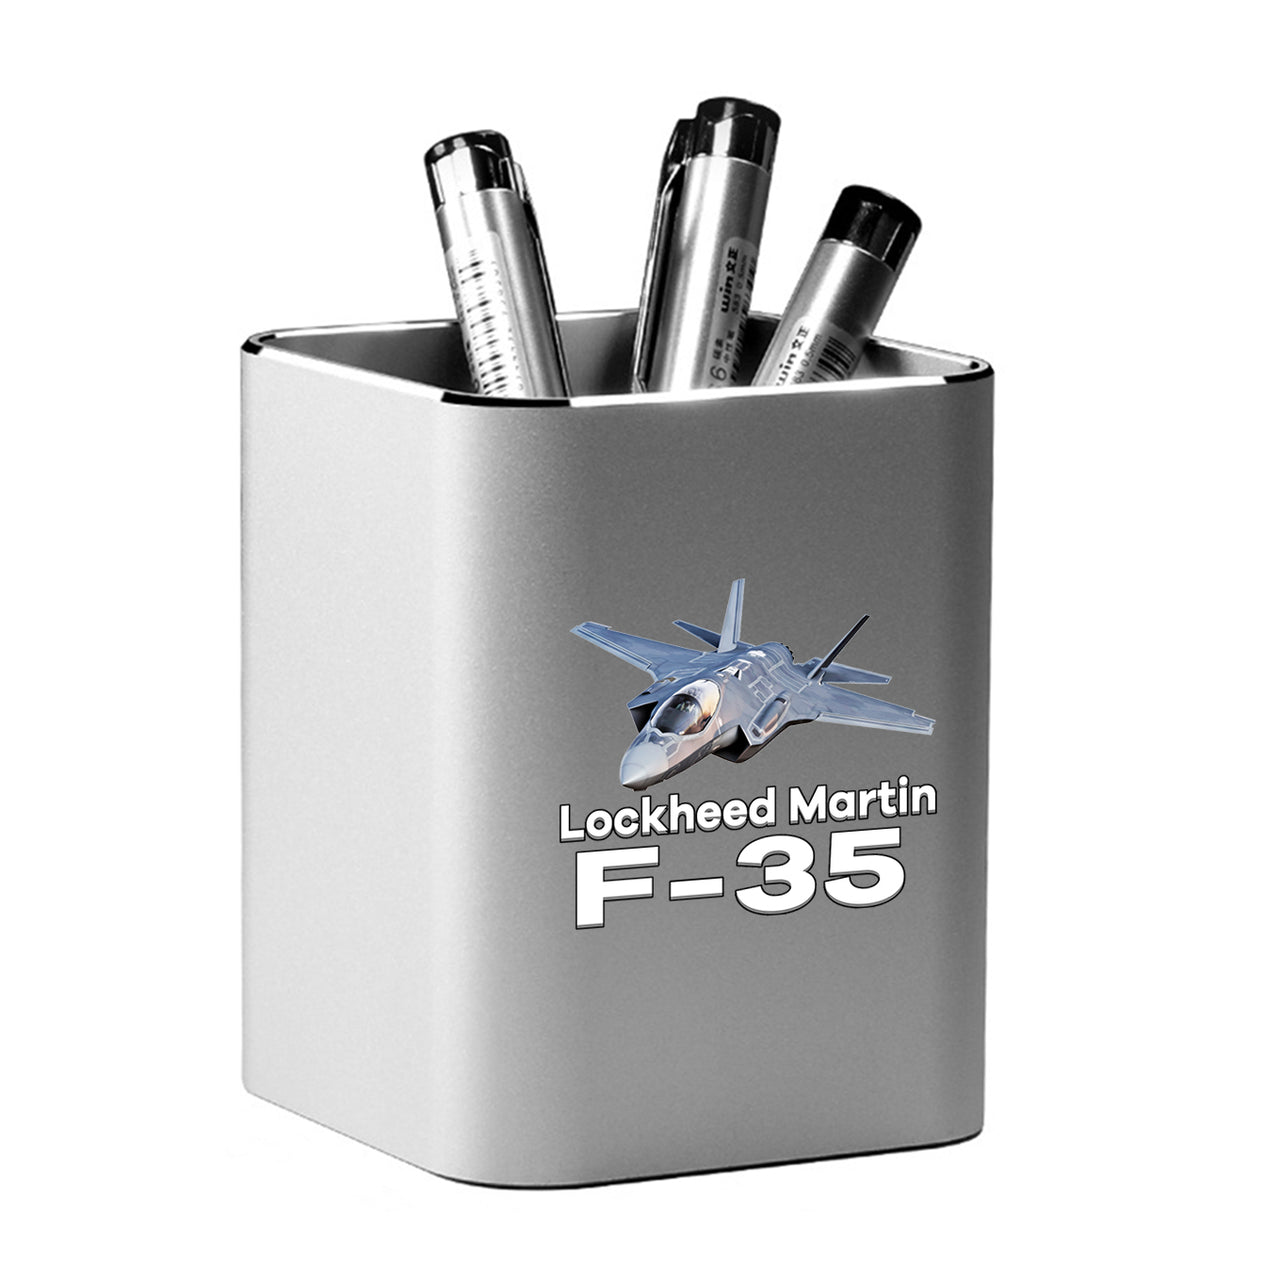 The Lockheed Martin F35 Designed Aluminium Alloy Pen Holders